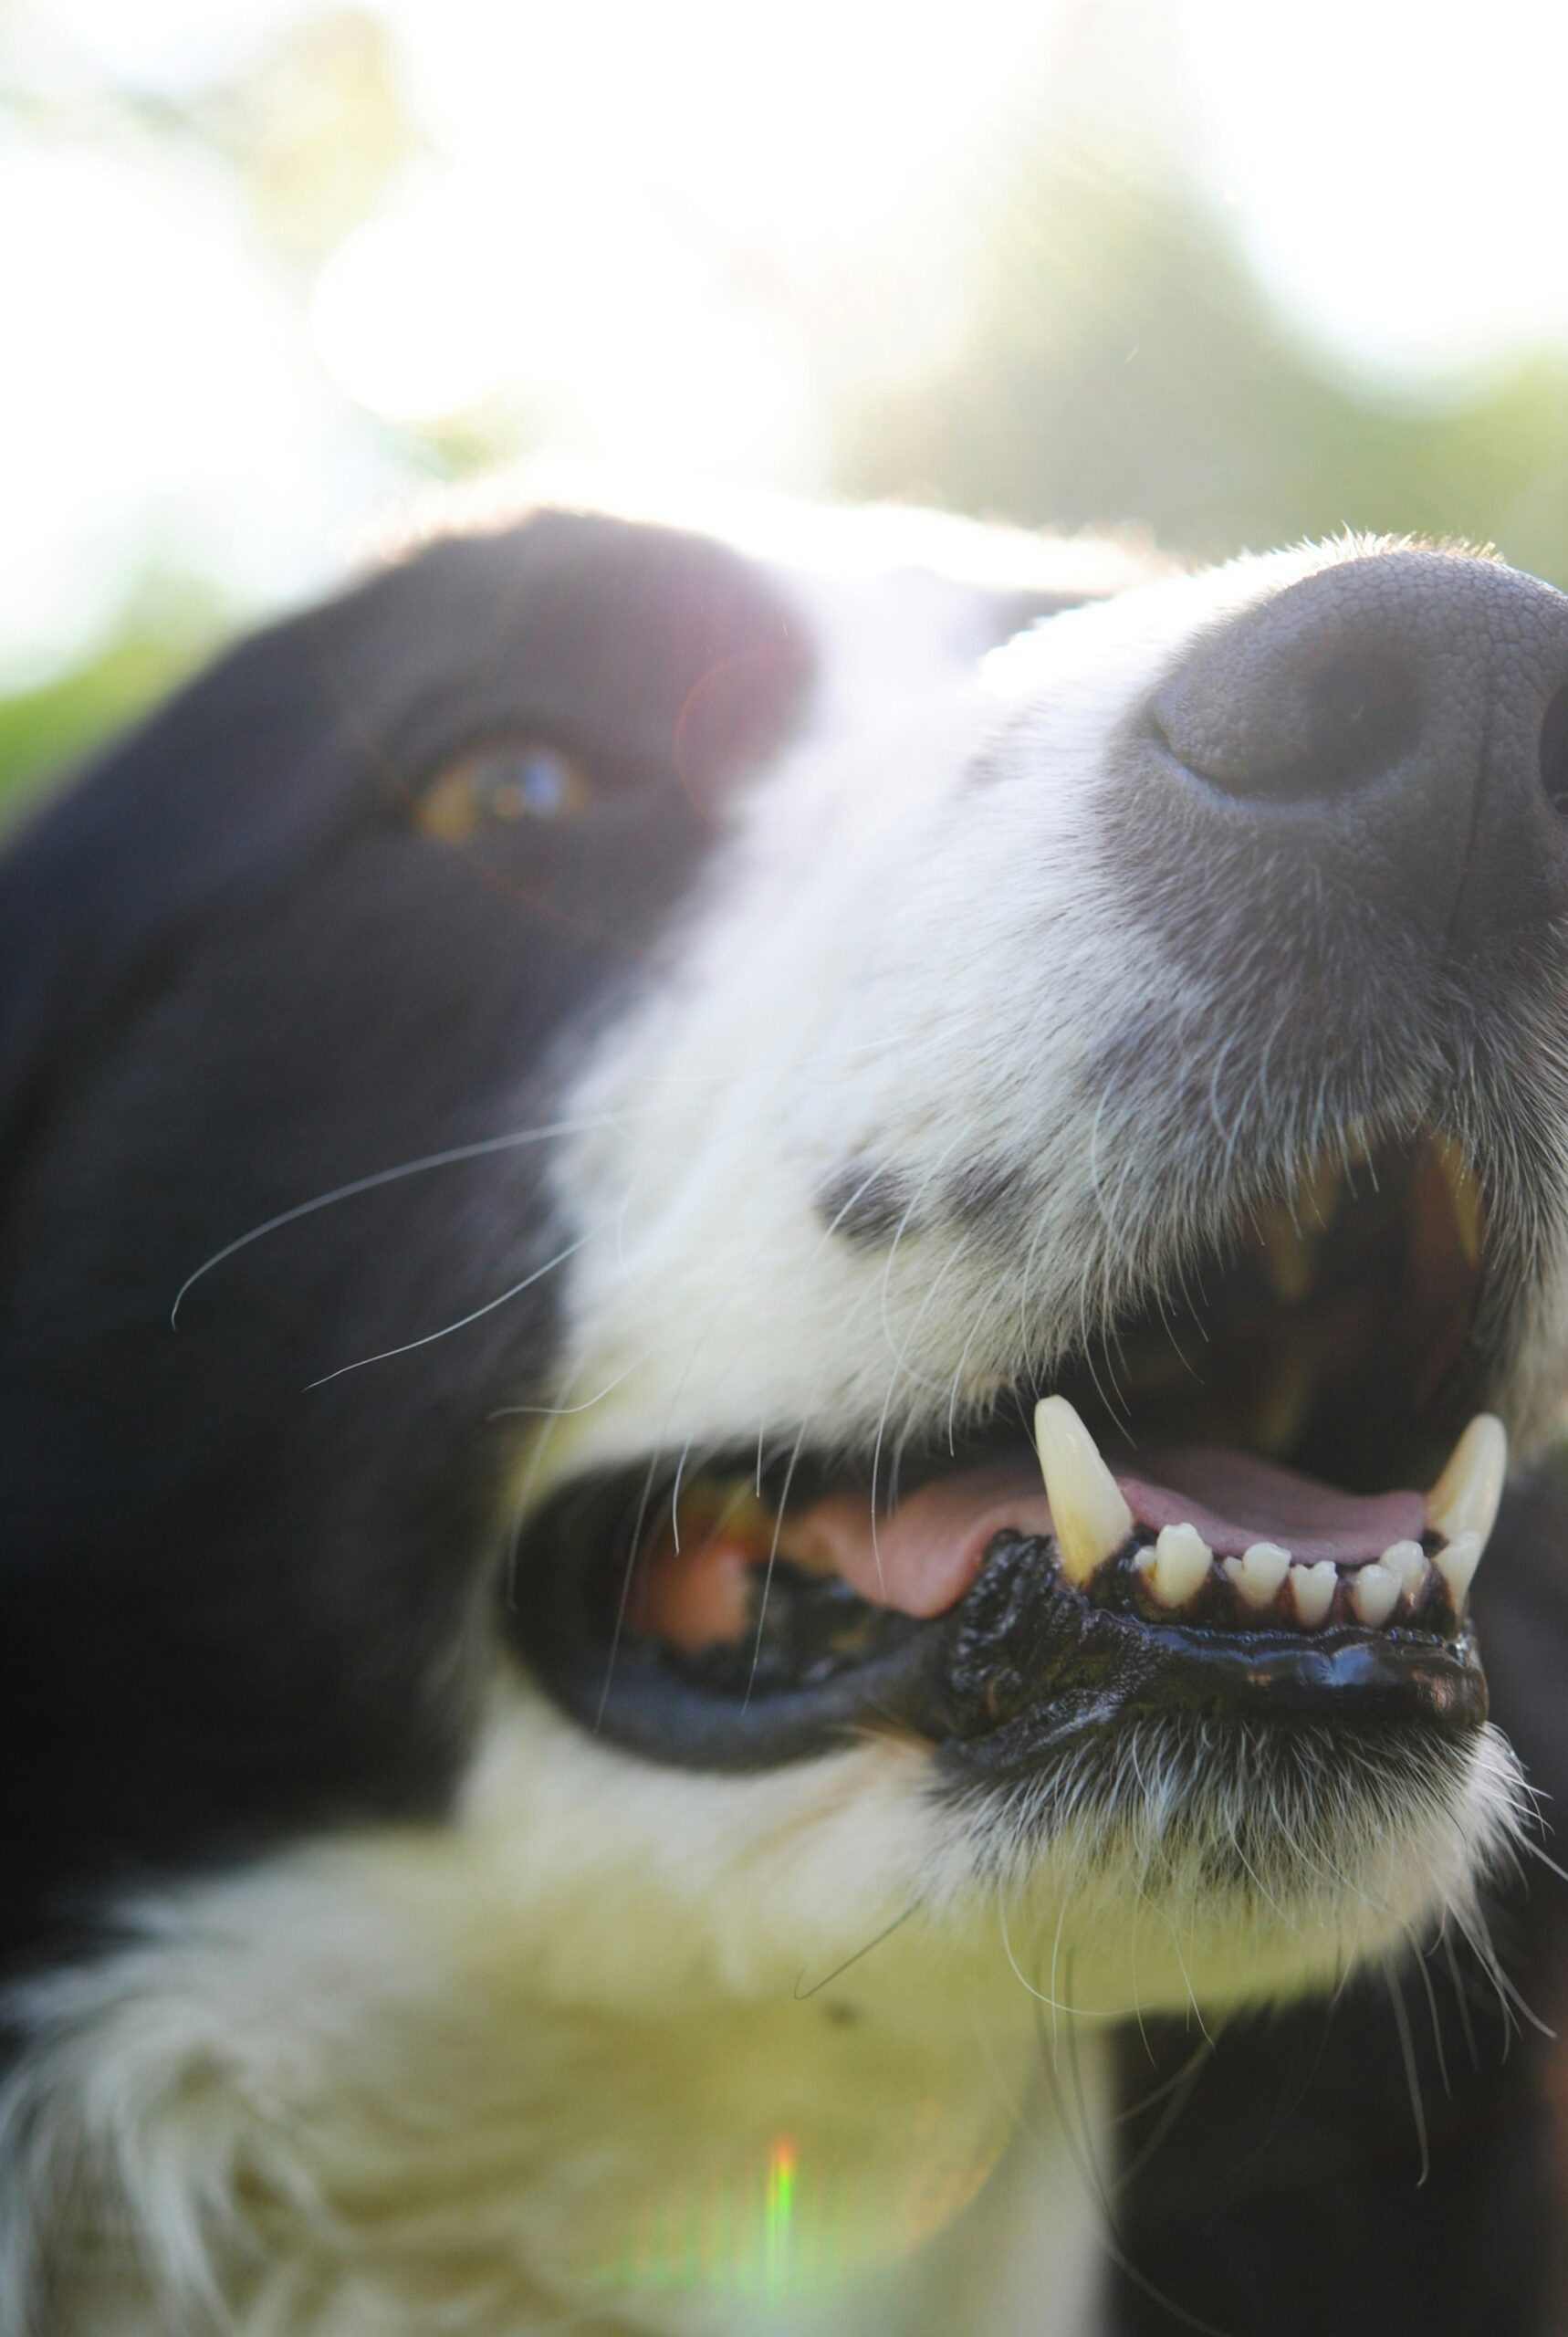 How a Dogs Dental Health Reveals Their True Age